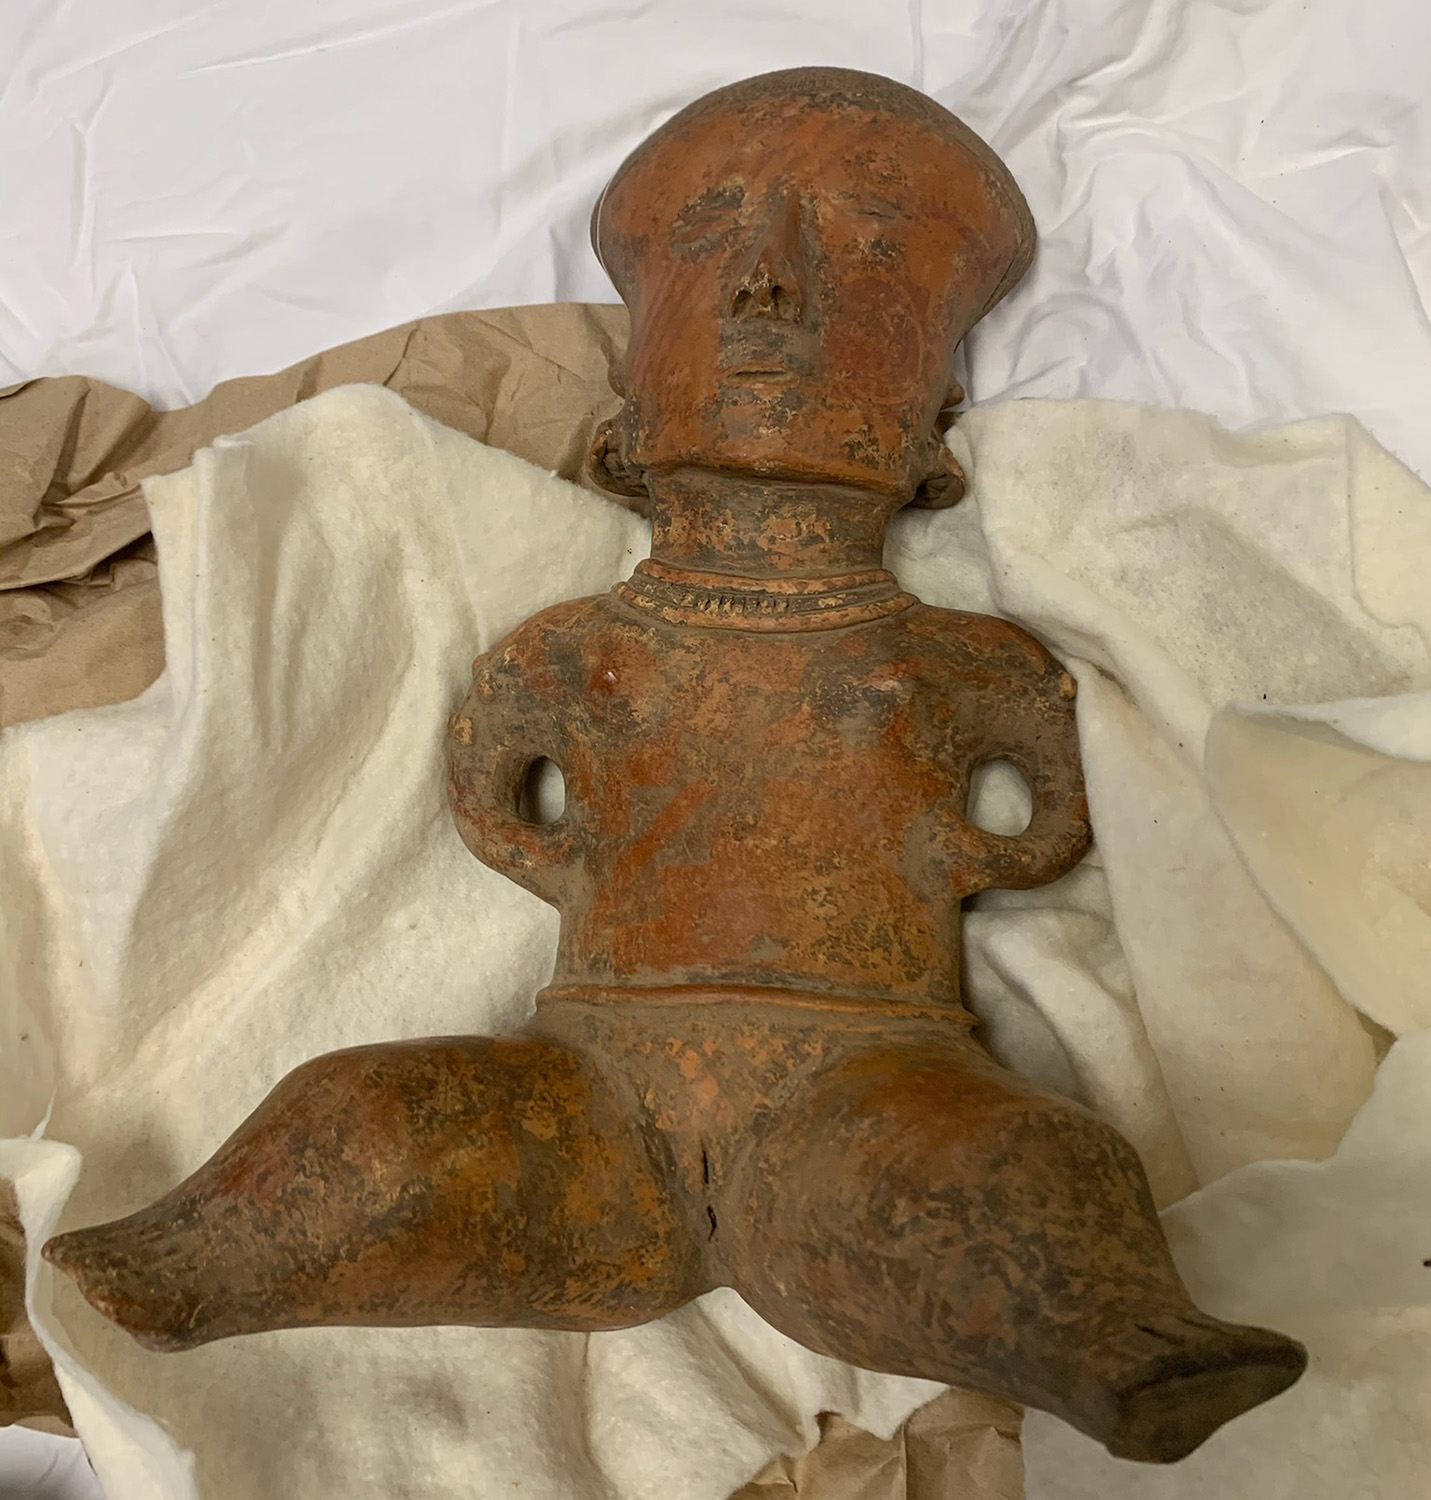 HSI Arizona returns hundreds of pre-Columbian artifacts to Mexico